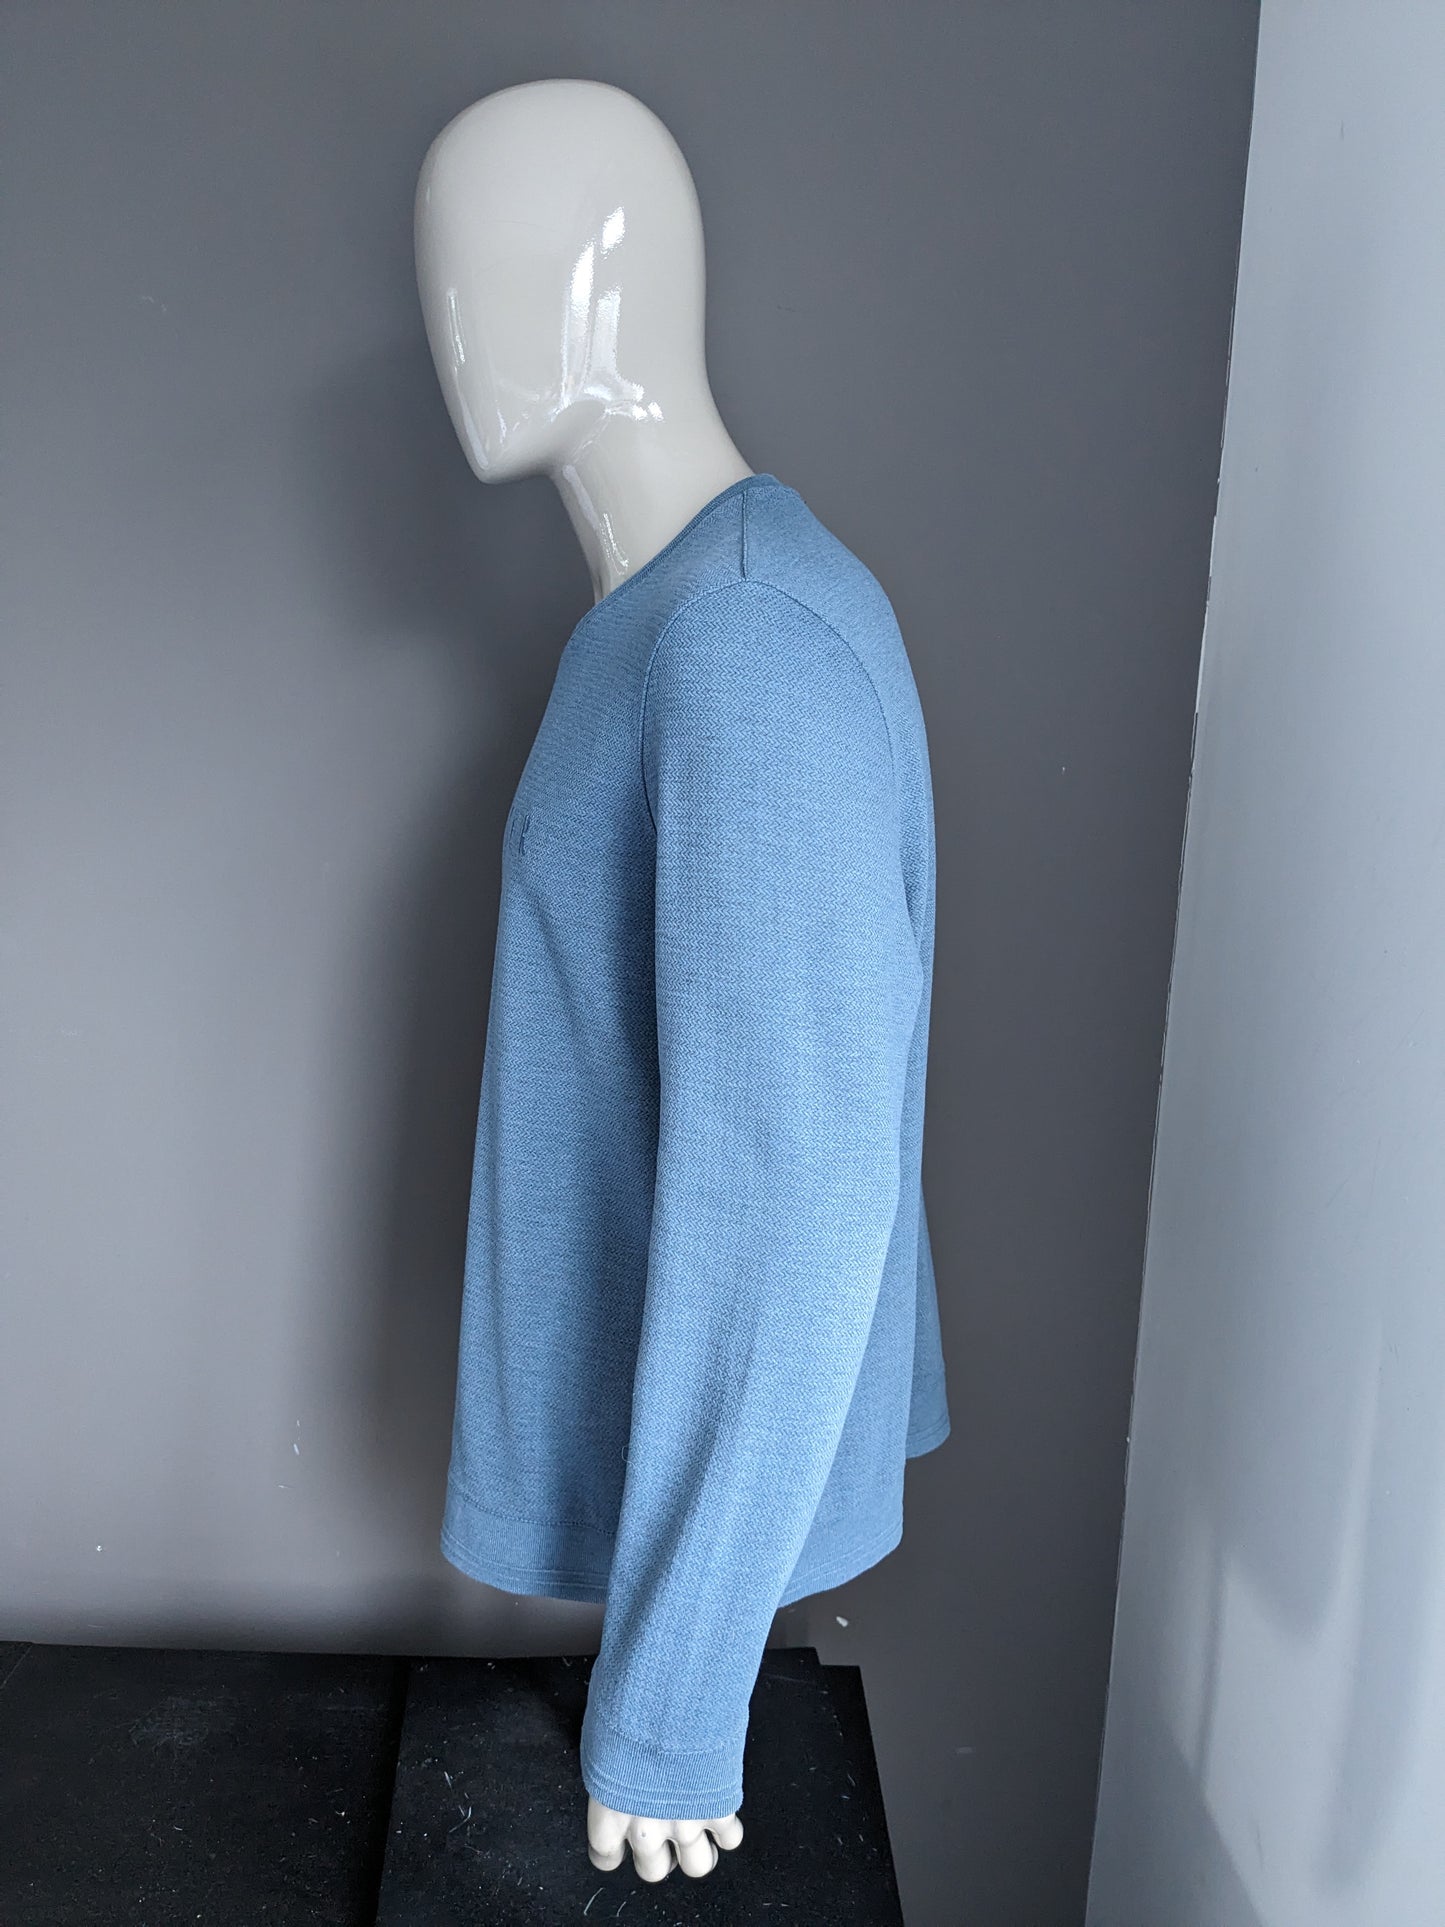 Ted Baker casual sweater. Blue herringbone motif. Size XL.